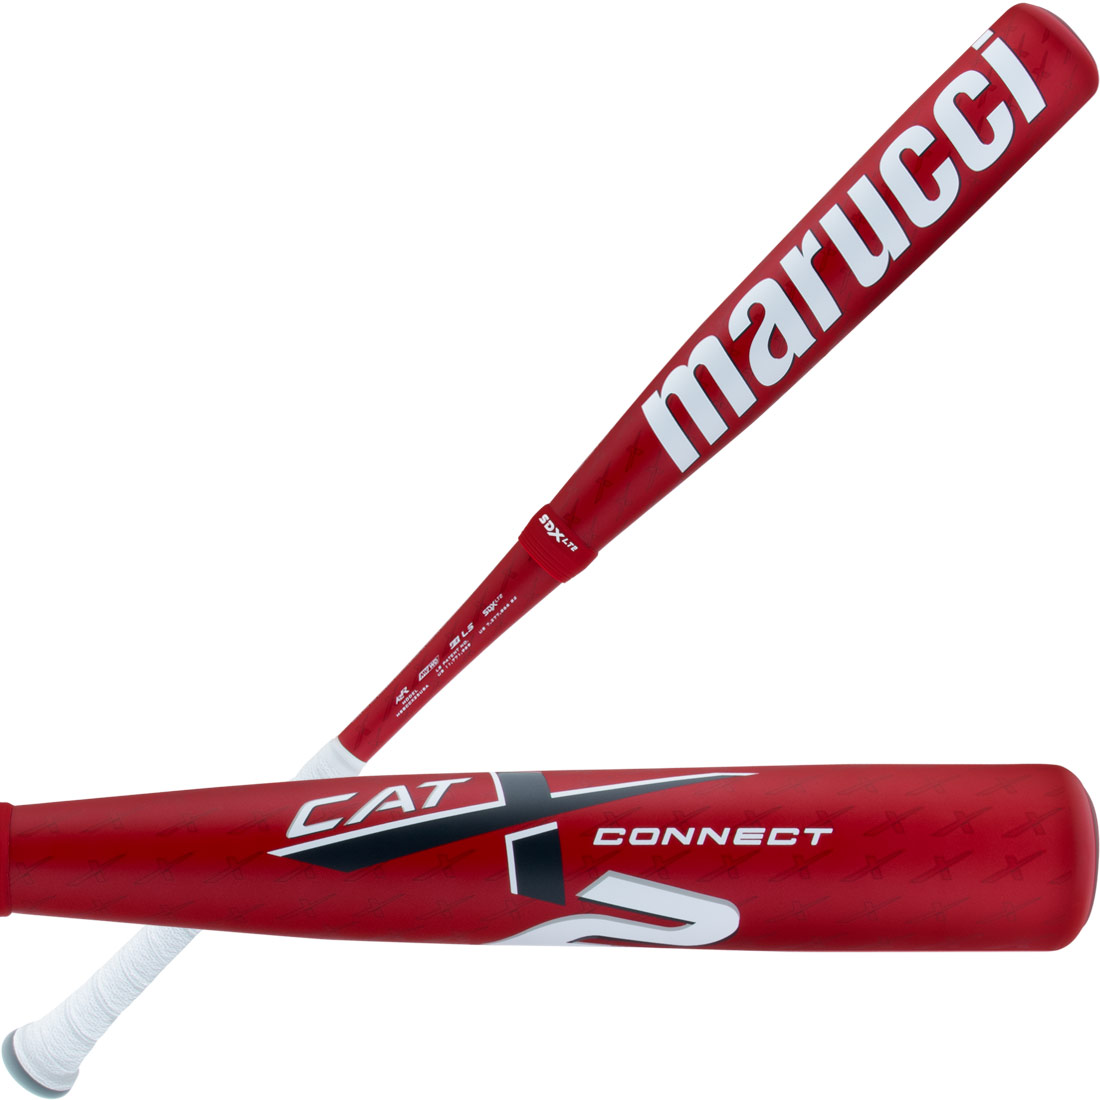 Marucci CATX2 Connect Youth USA Baseball Bat -5oz MSBCCX25USA